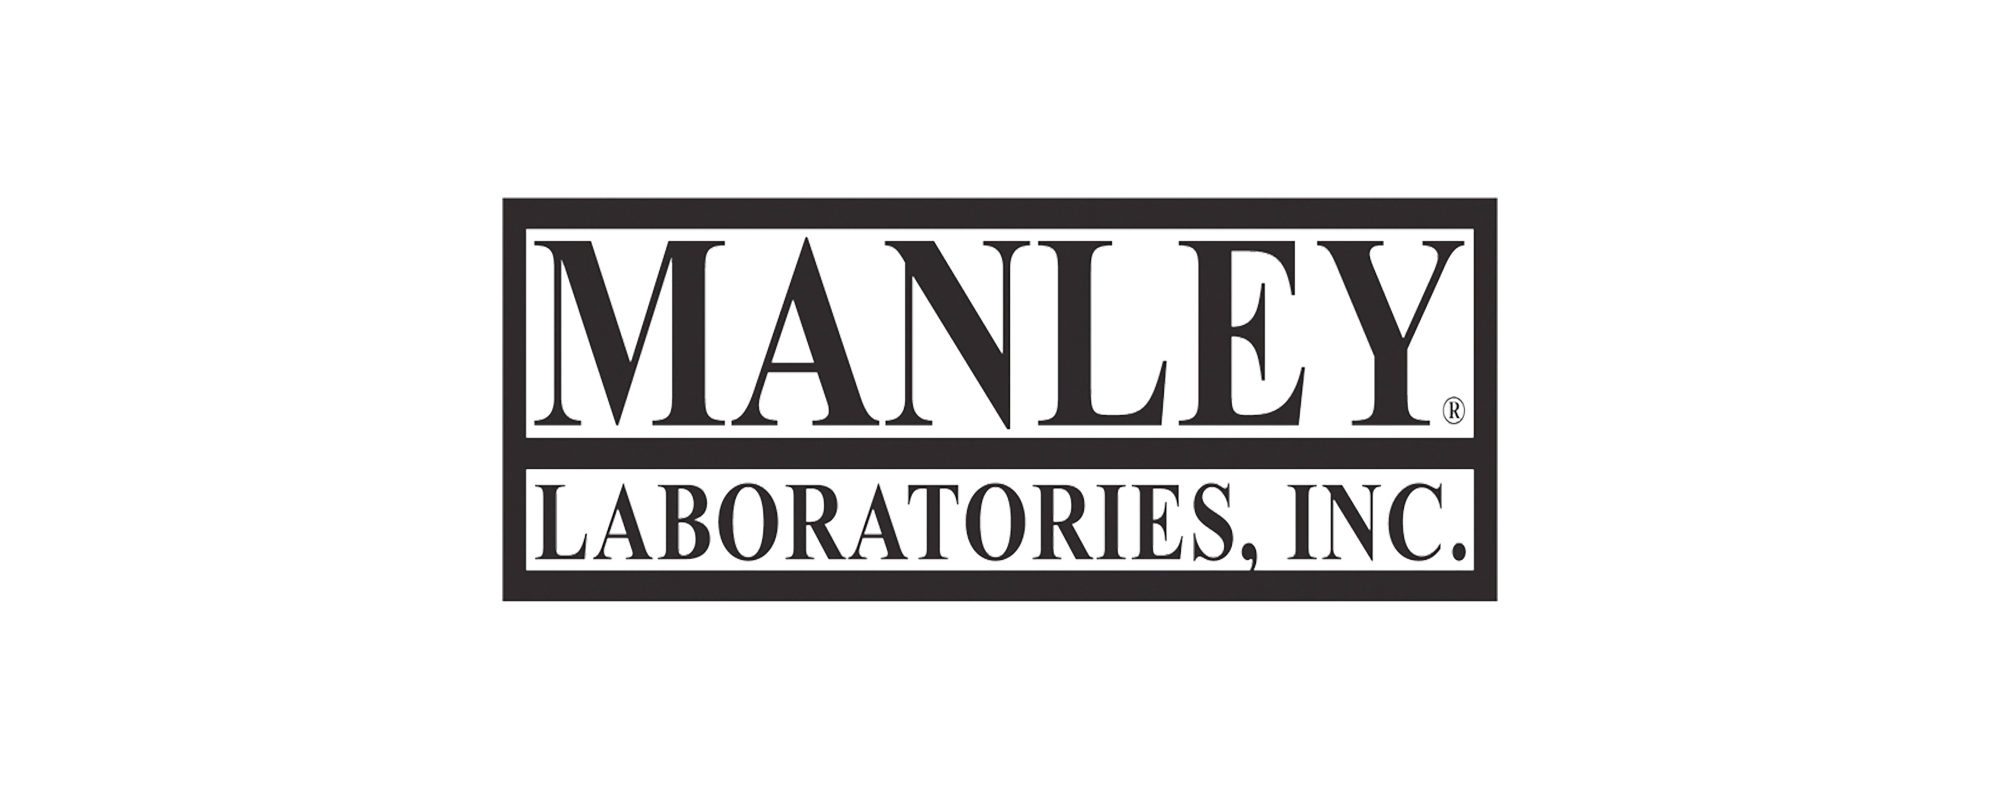 Manley-Banner-1